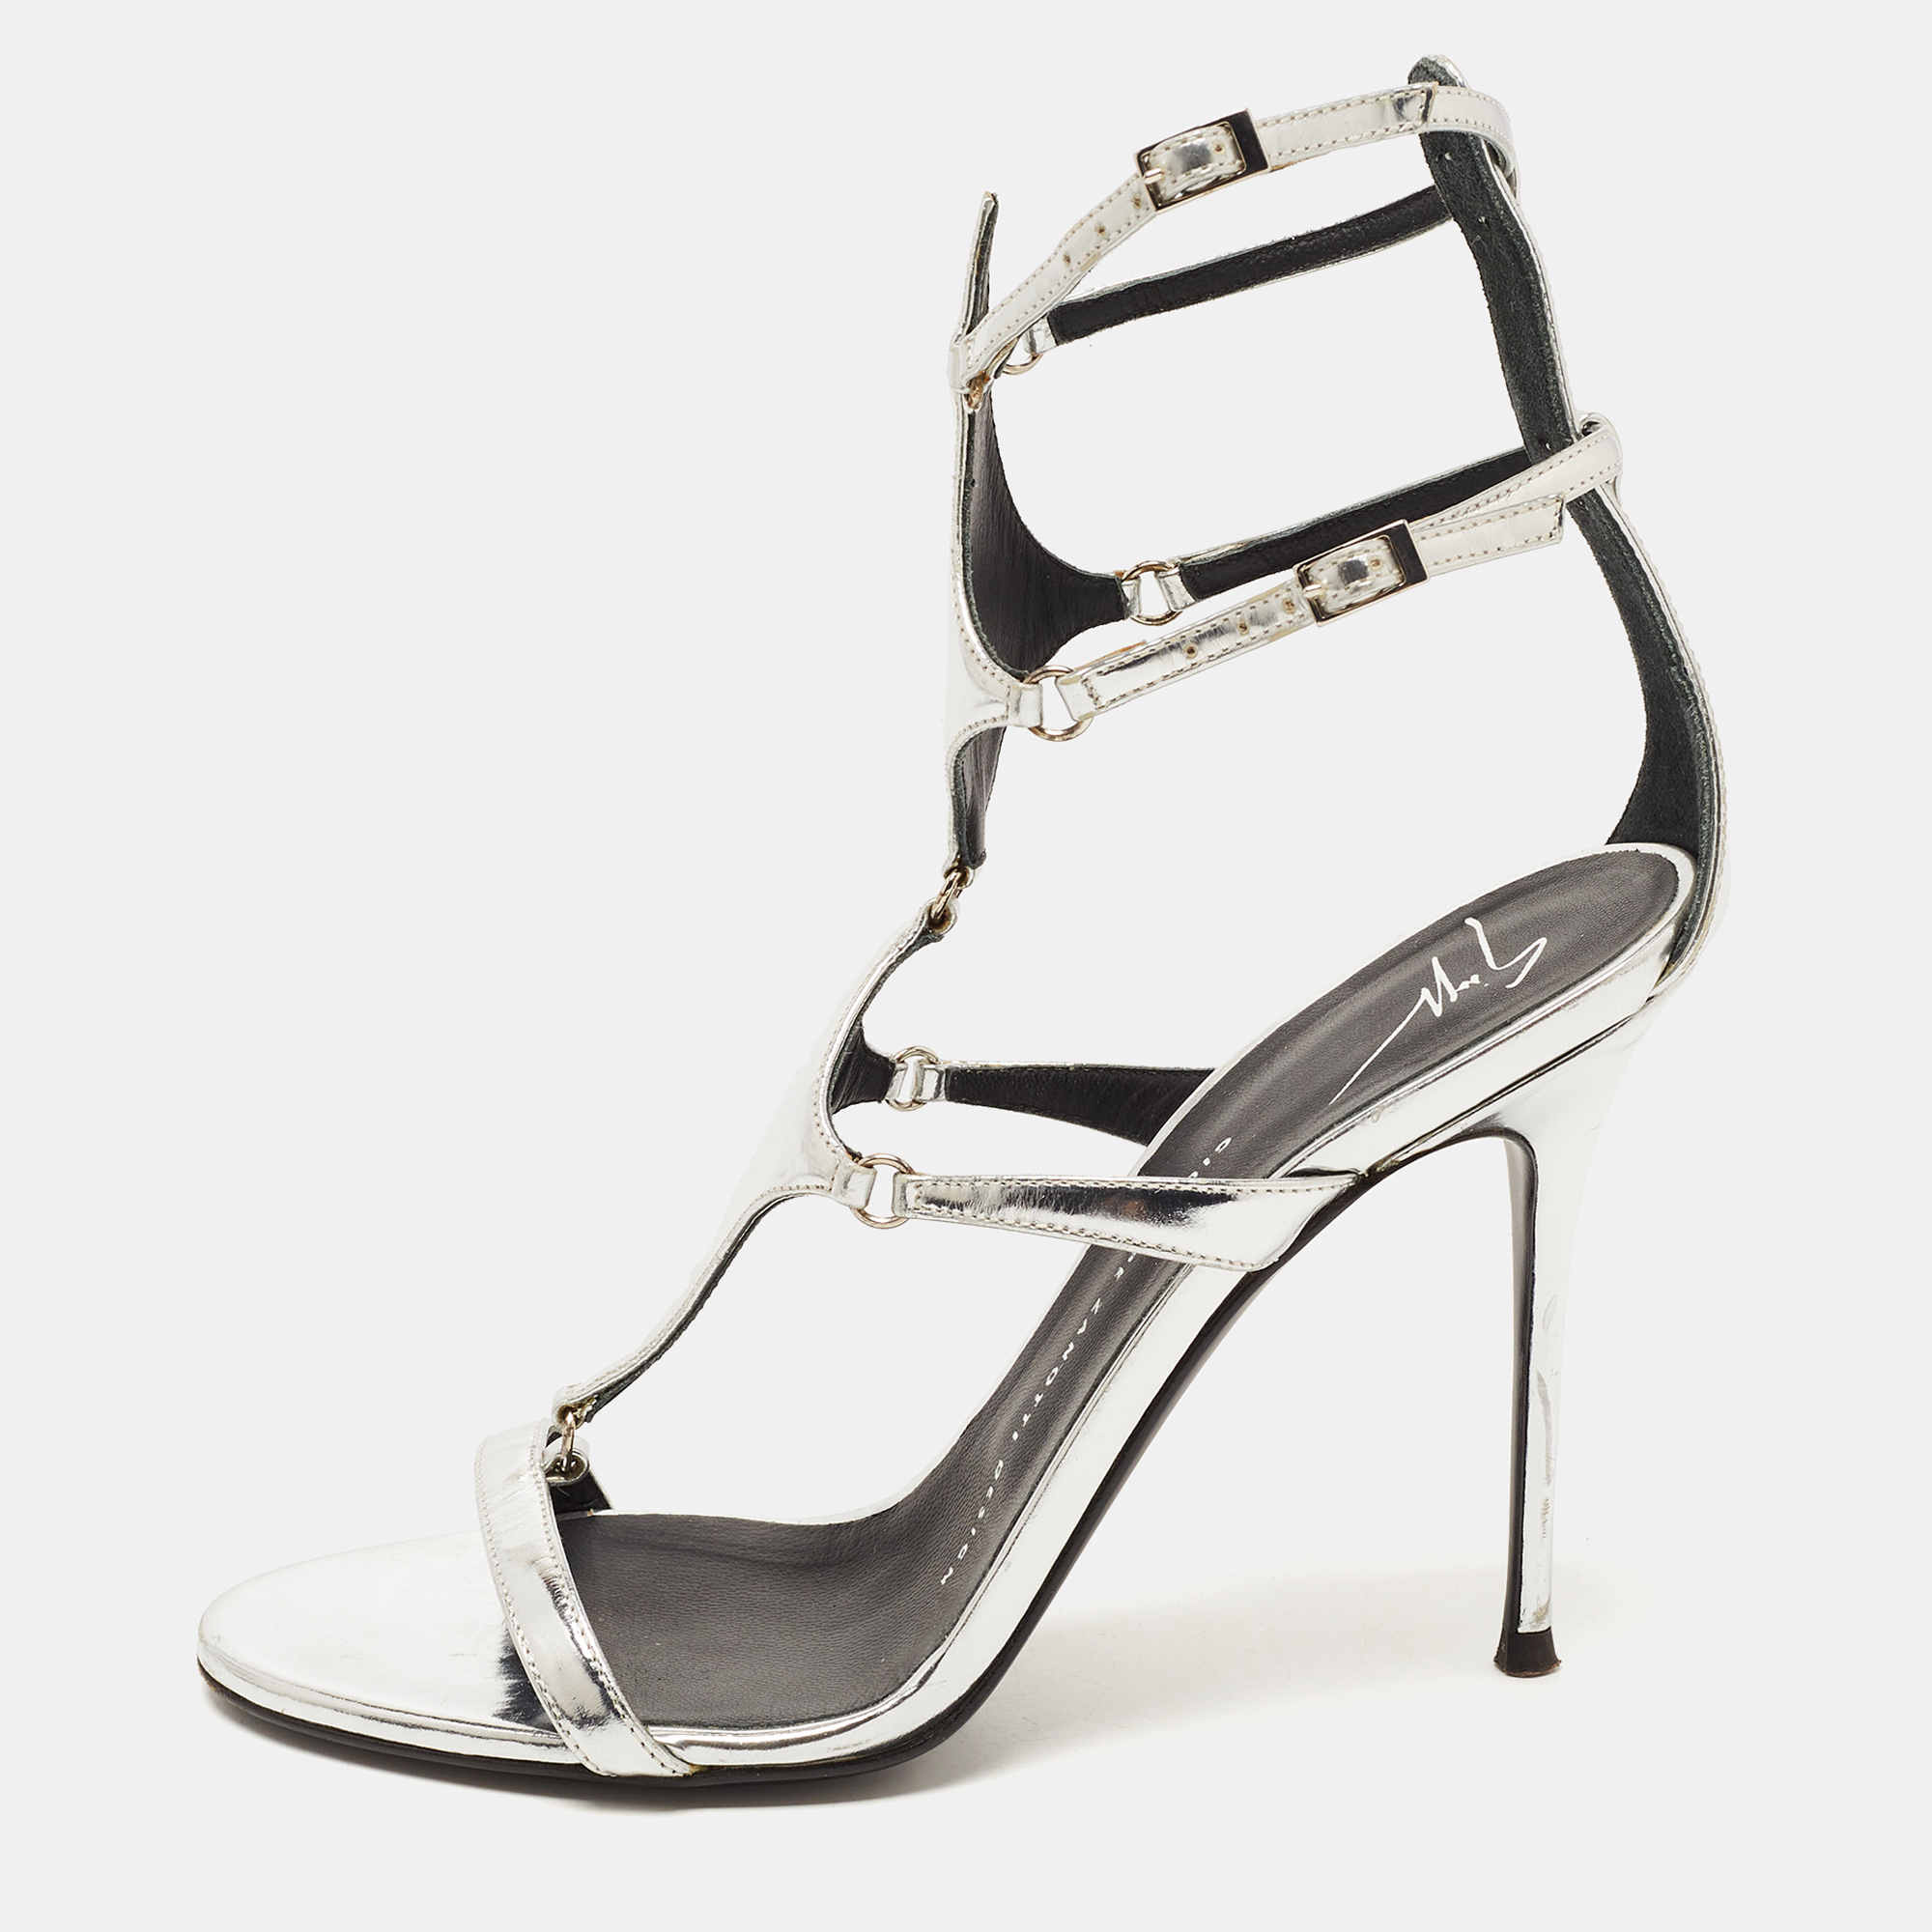 Pre-owned Giuseppe Zanotti Metallic Silver Leather Strappy Sandals Size 37.5